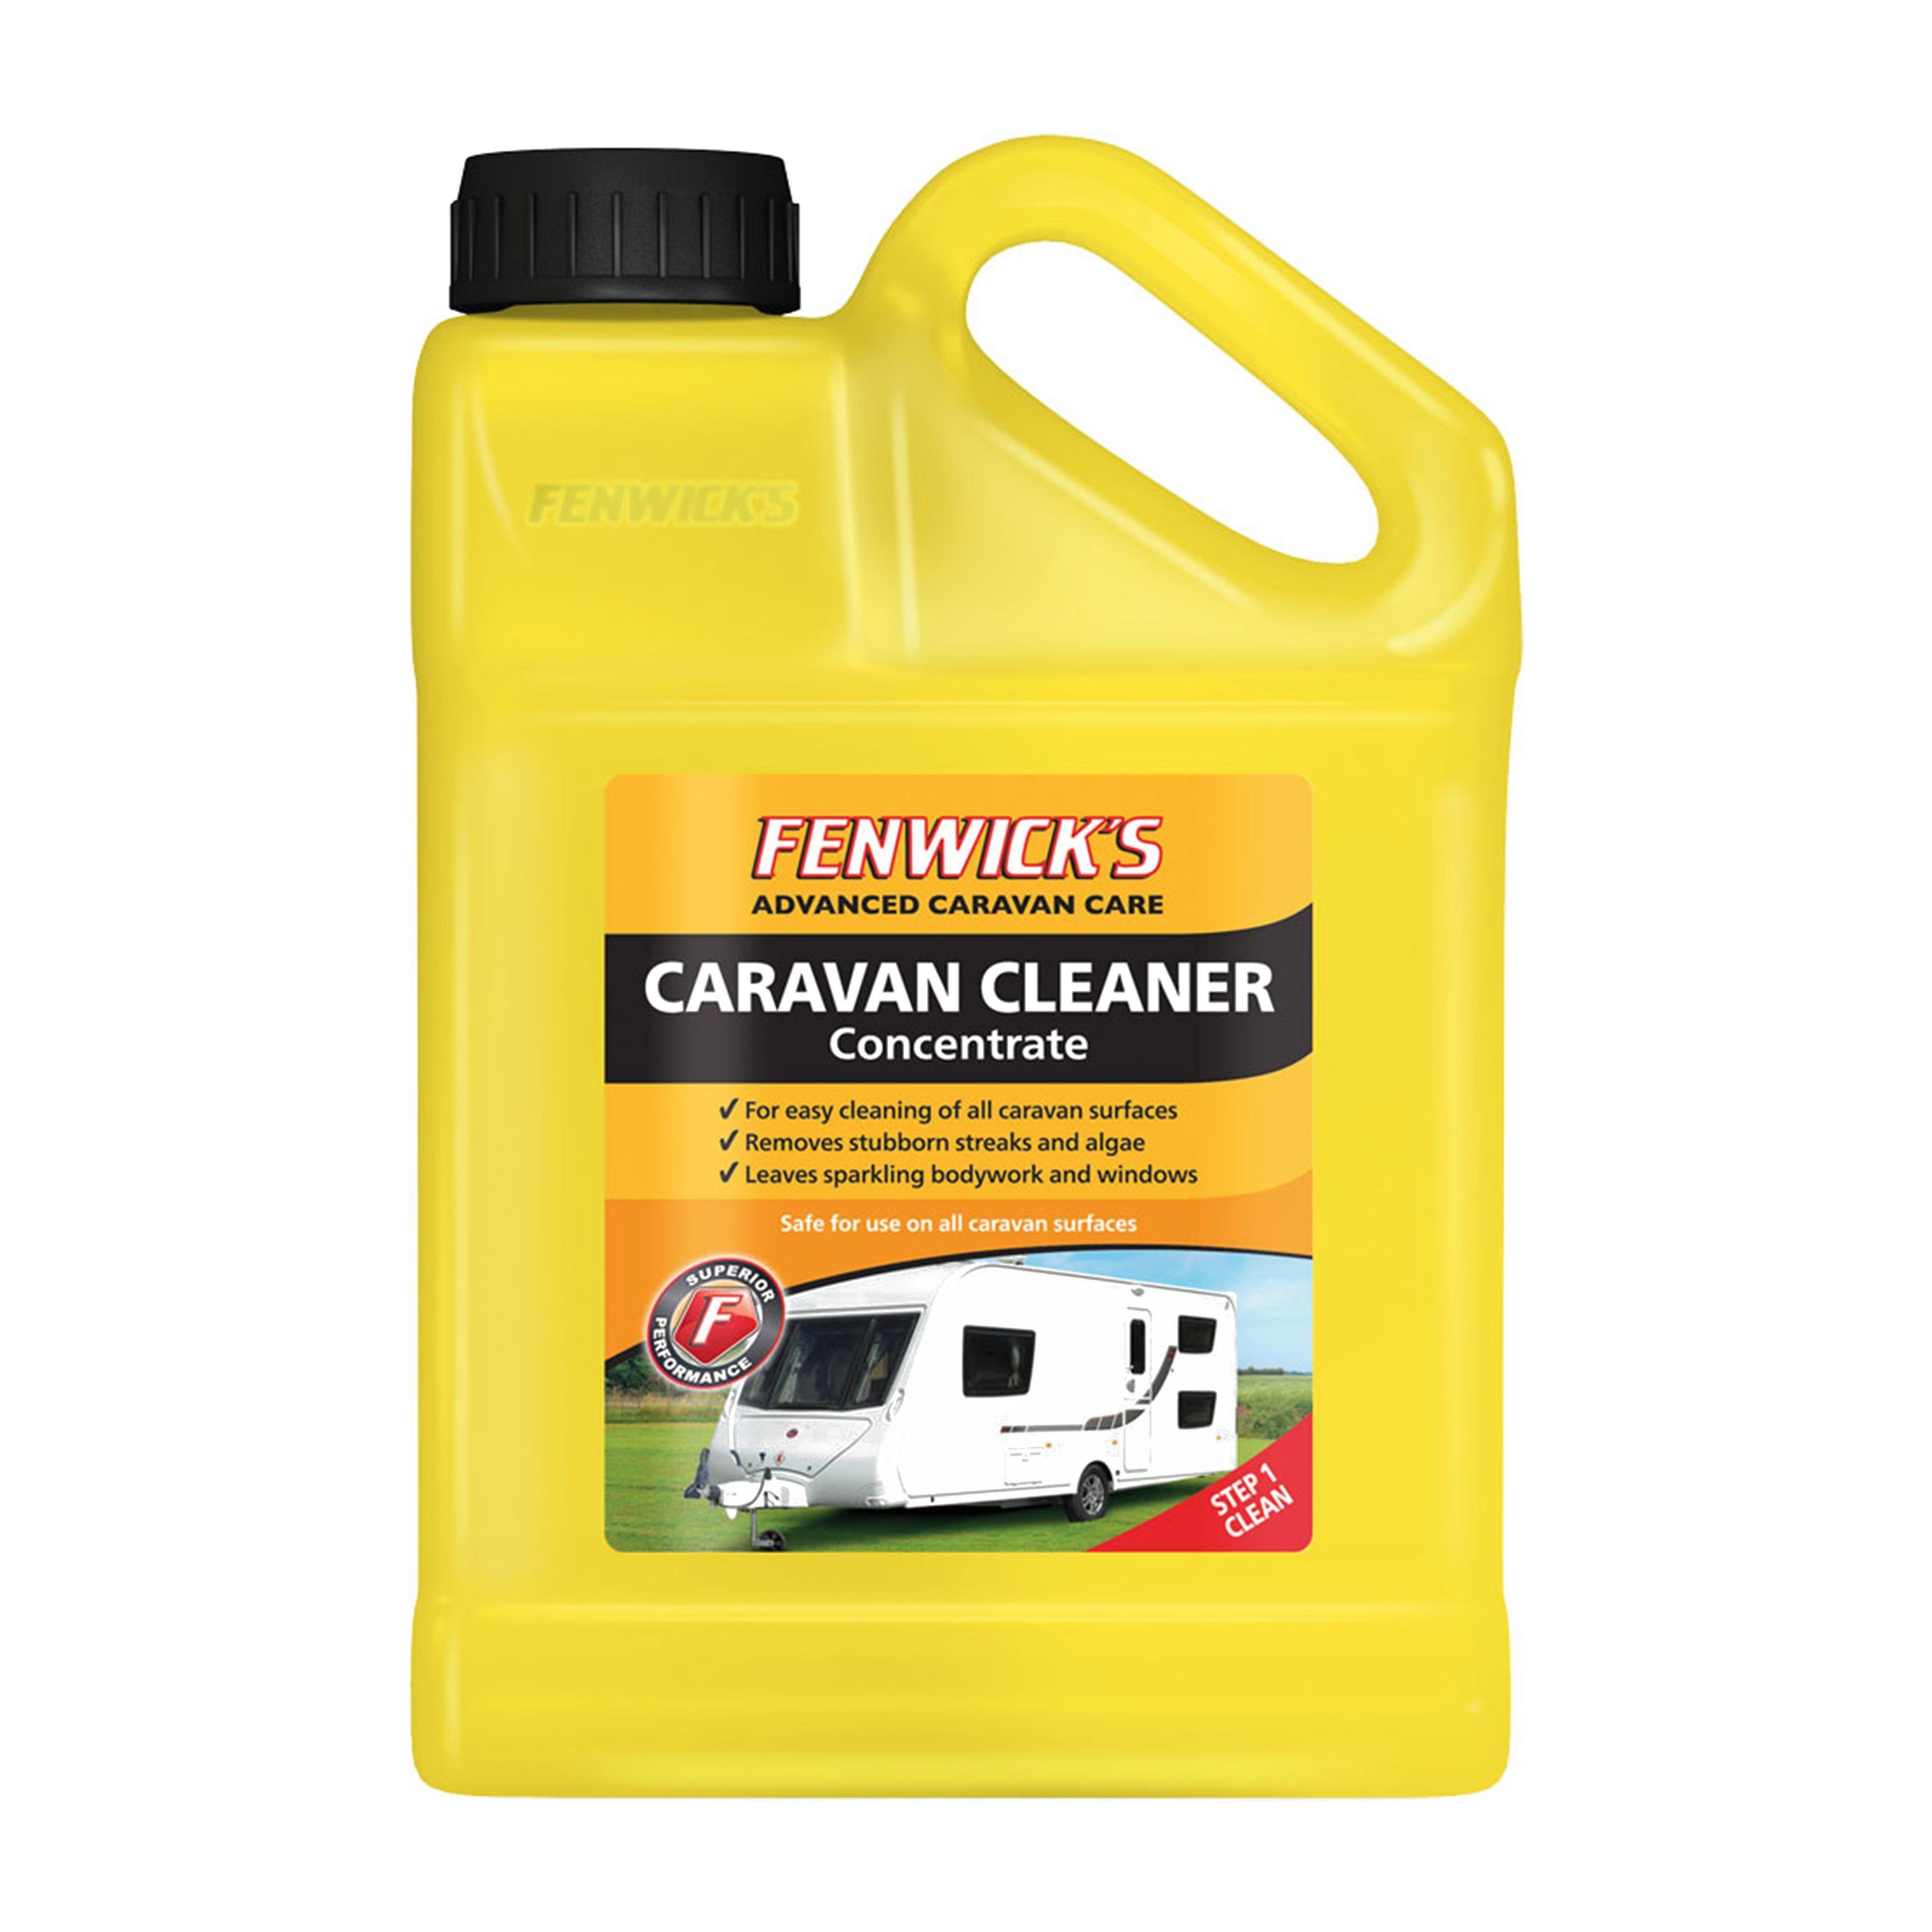 Fenwicks Caravan Cleaner Concentrate (1 Litre) Review